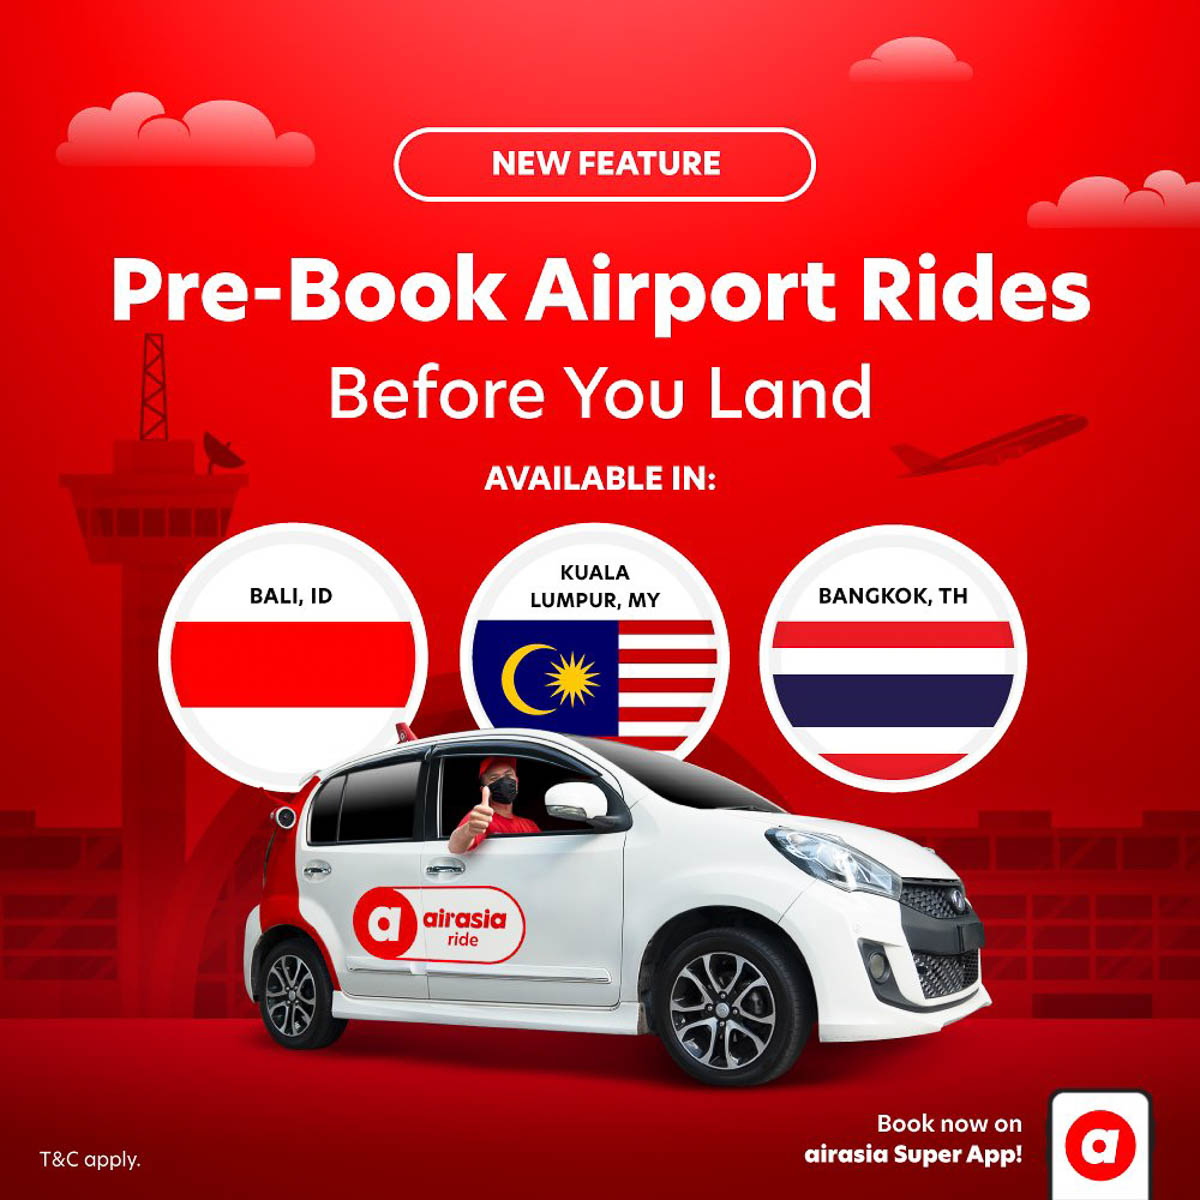 Pre-book your airasia ride